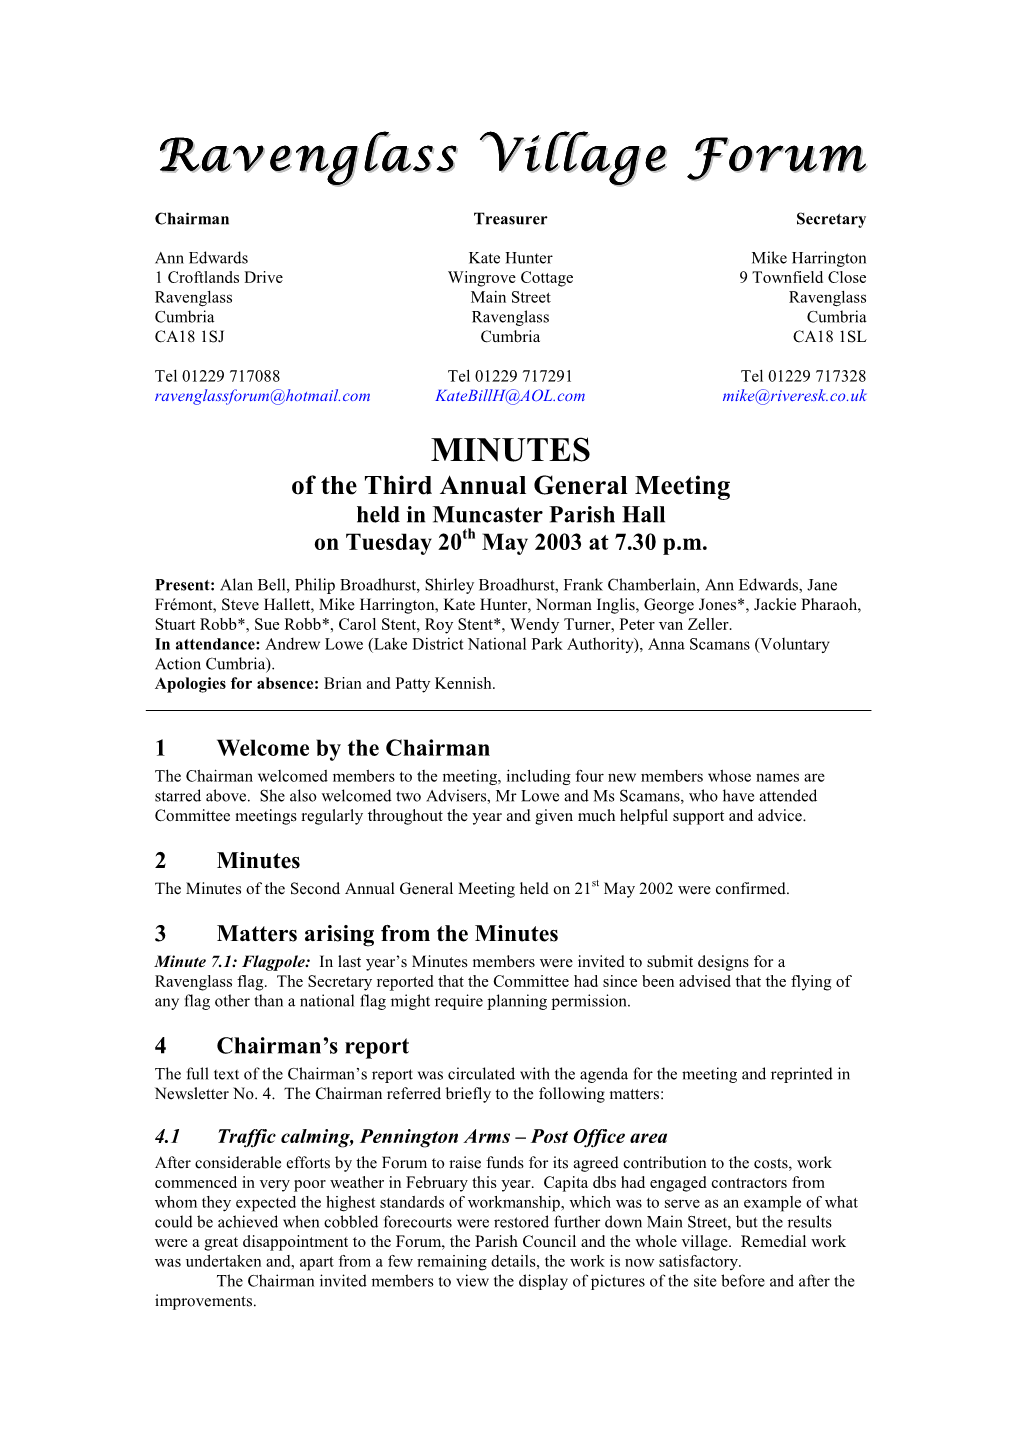 Ravenglass Village Forum 3Rd AGM, 20-5-03: Minutes